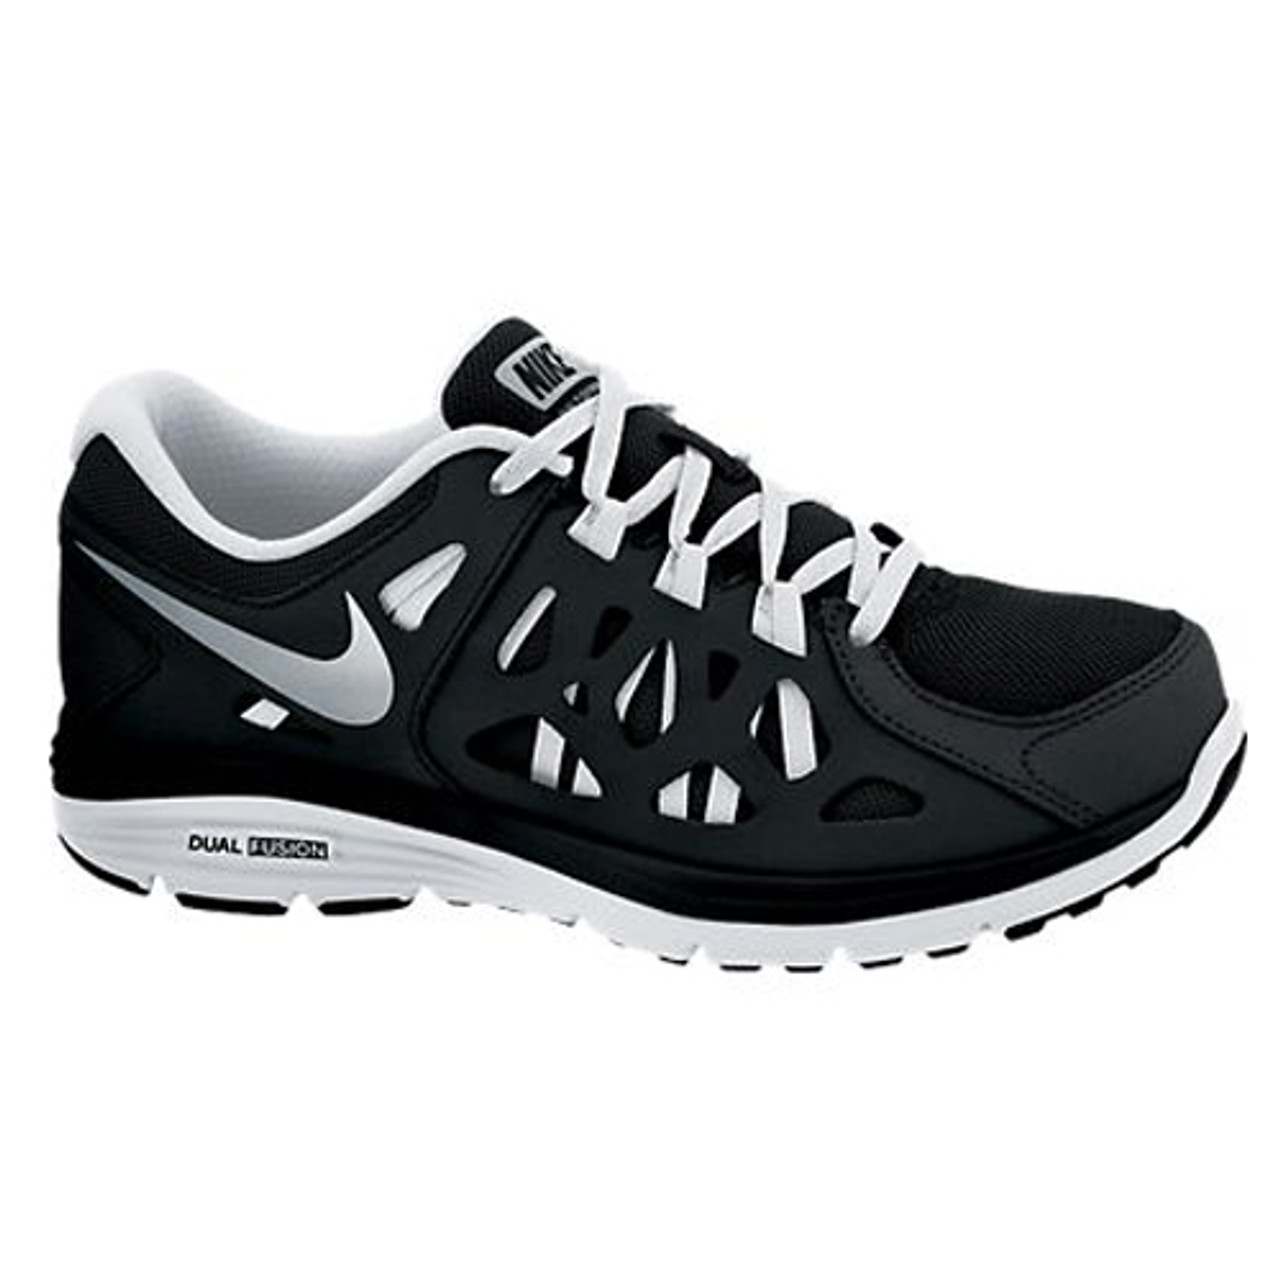 New Nike Dual Run 2 Black/White Ladies Running Shoes - | Discount Ladies & More Shoolu.com | Shoolu.com